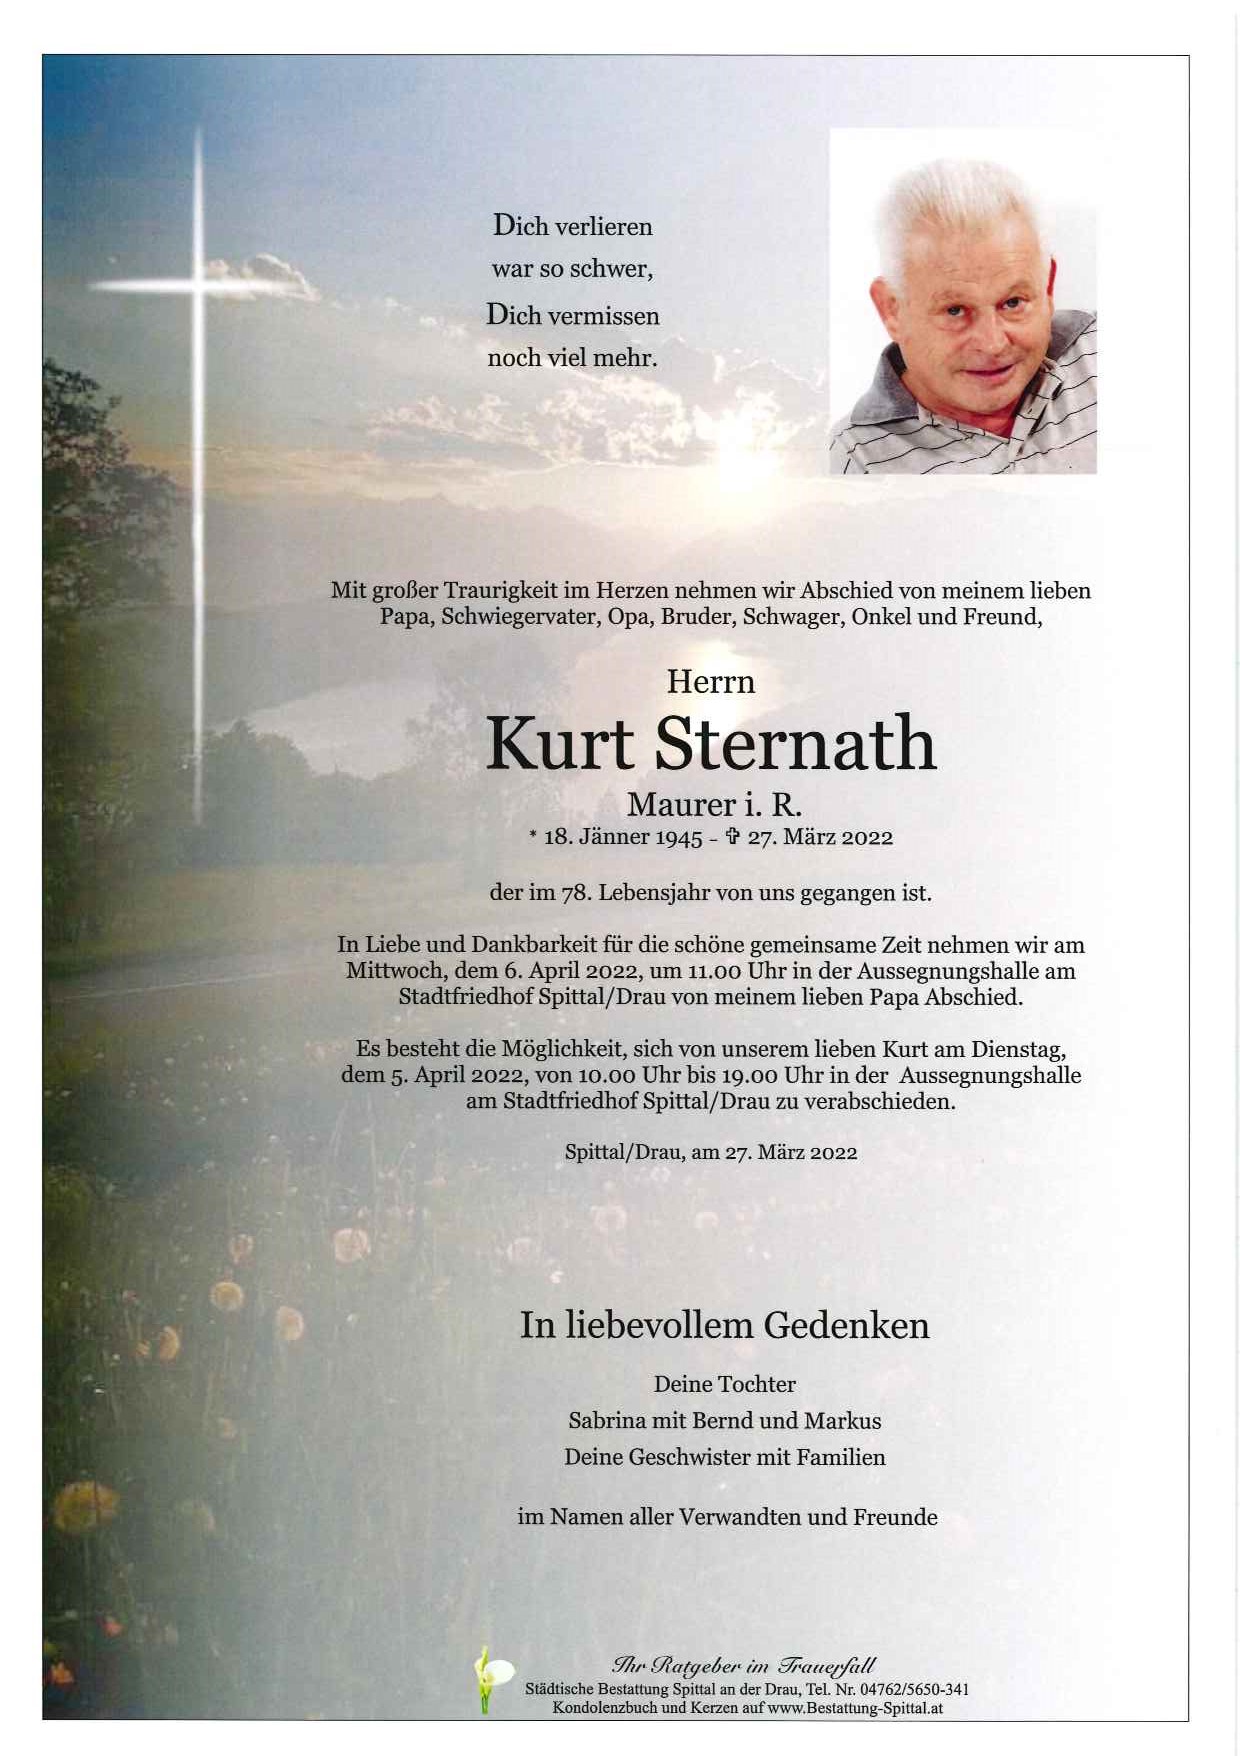 Kurt Sternath